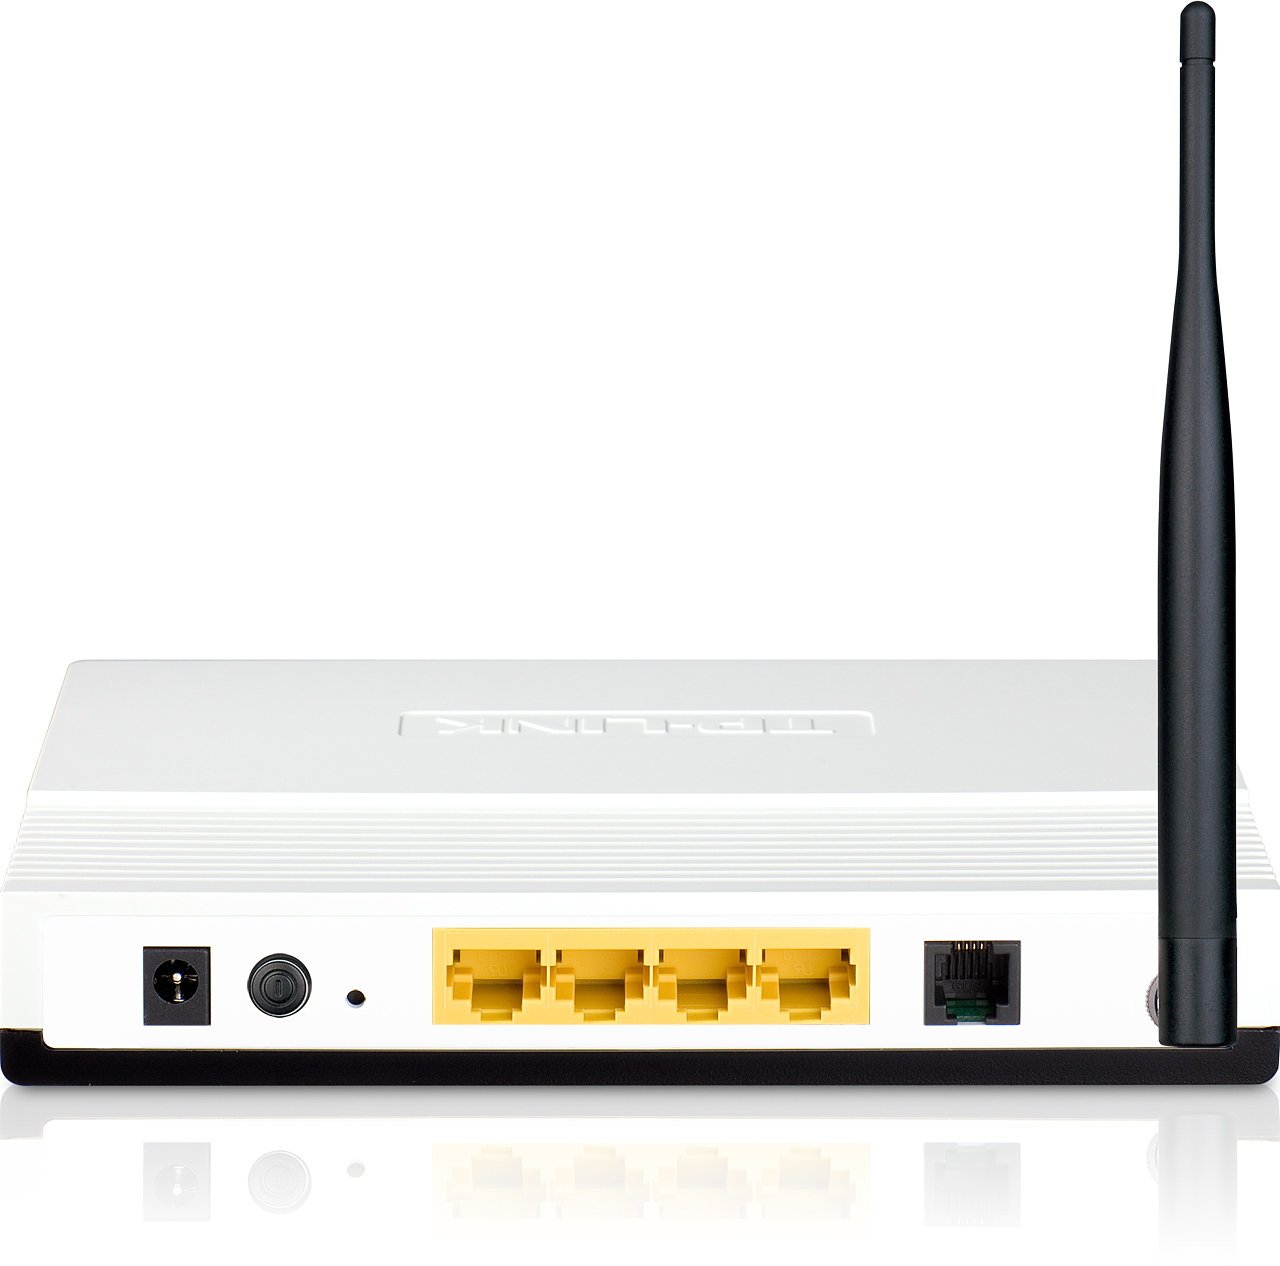 54Mbps Wireless ADSL2+ Modem Router TD-W8901G